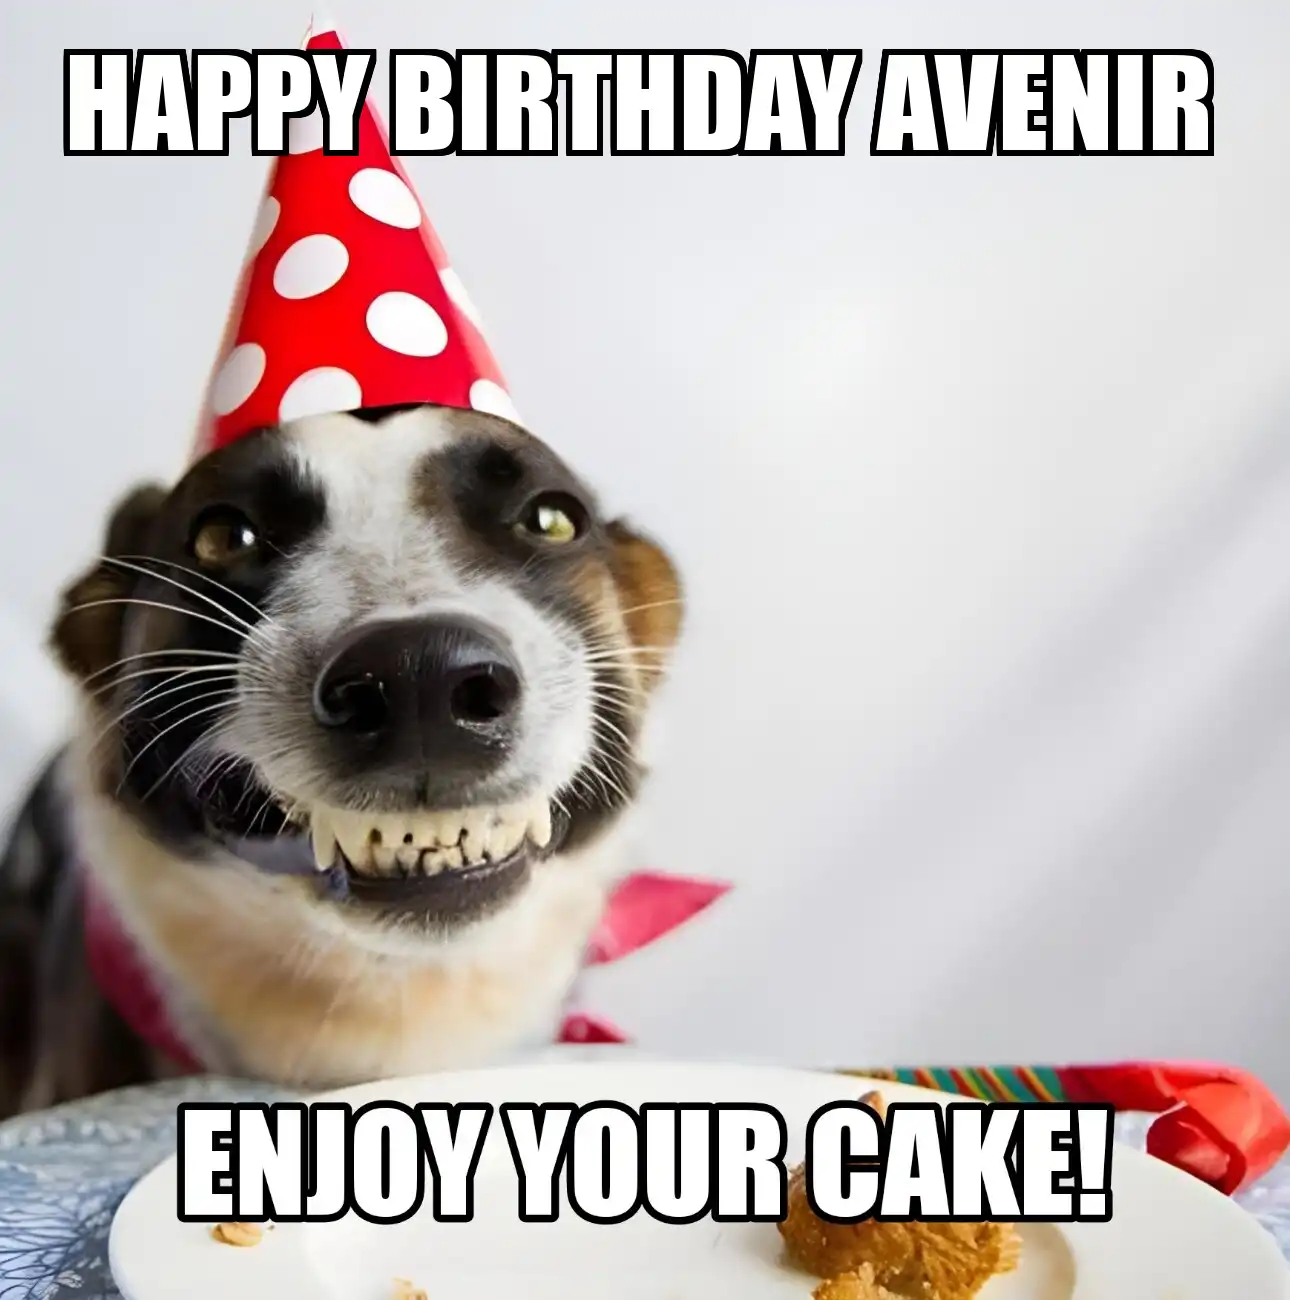 Happy Birthday Avenir Enjoy Your Cake Dog Meme